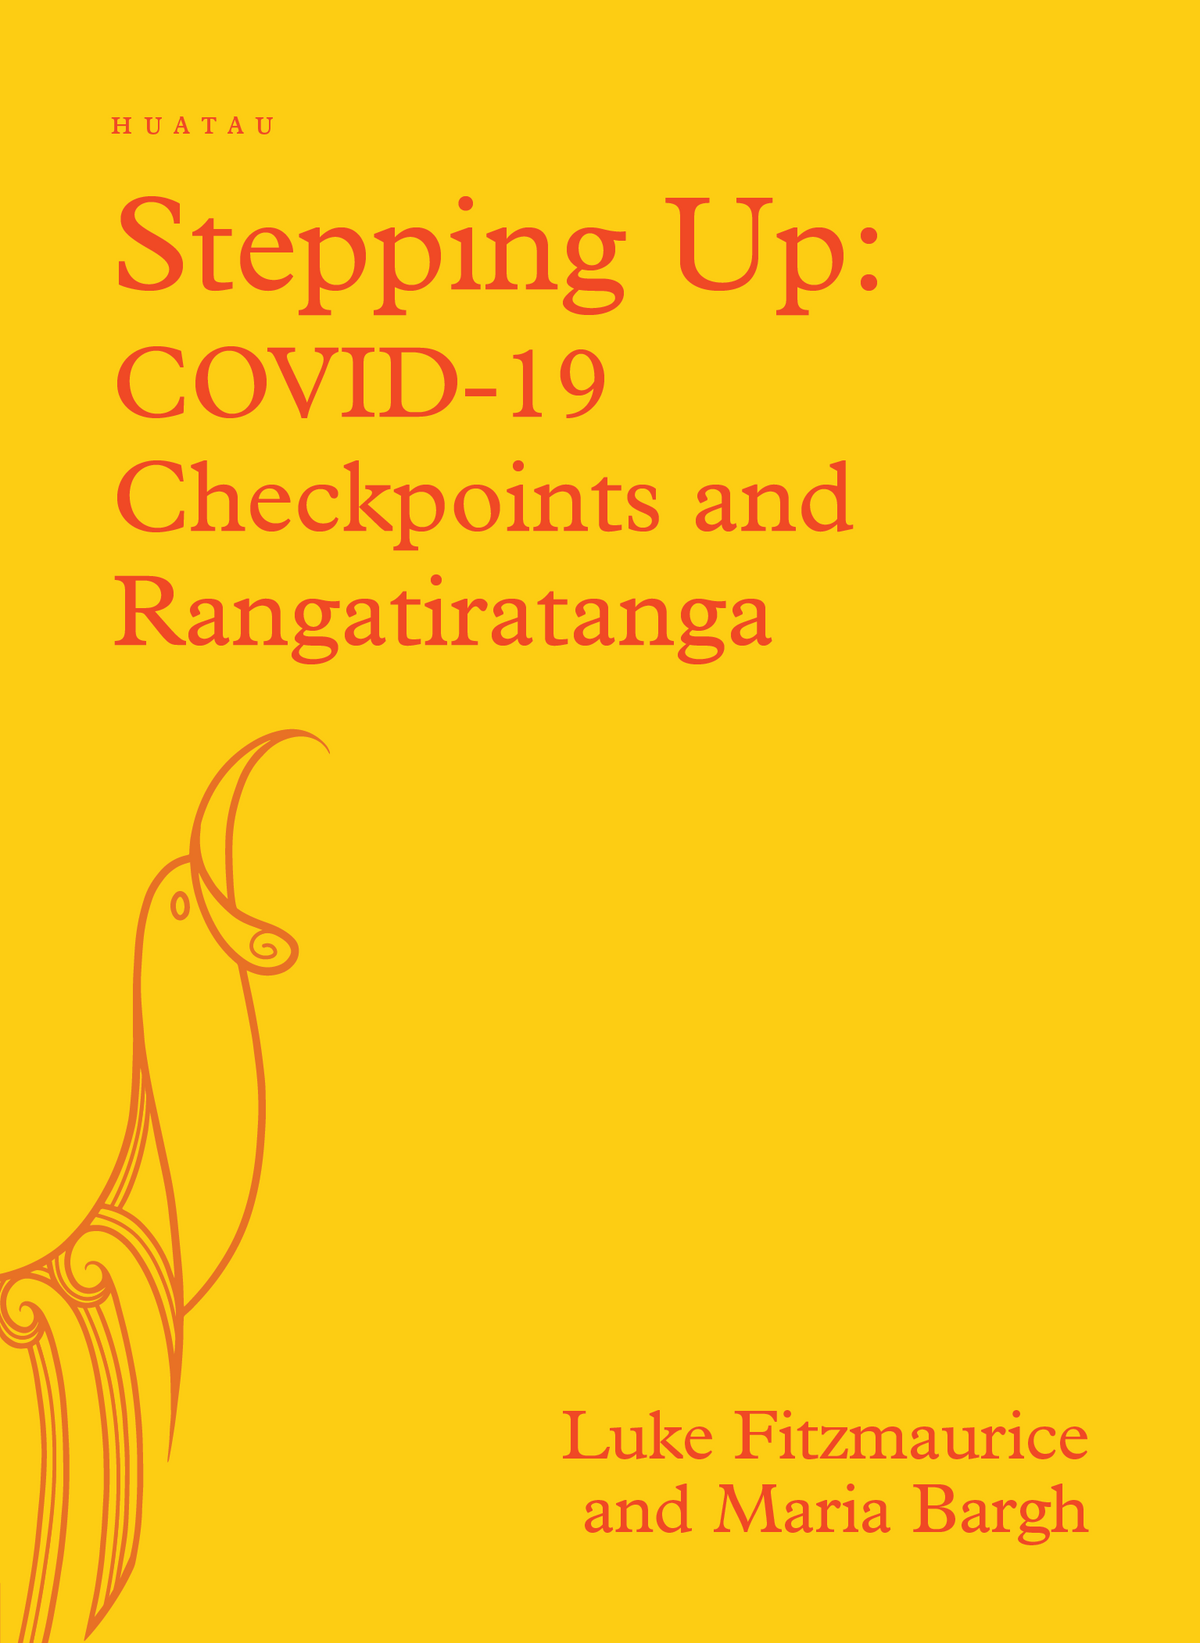 Stepping Up: COVID-19 Checkpoints and Rangatiratanga by Luke Fitzmourice and Maria Bargh